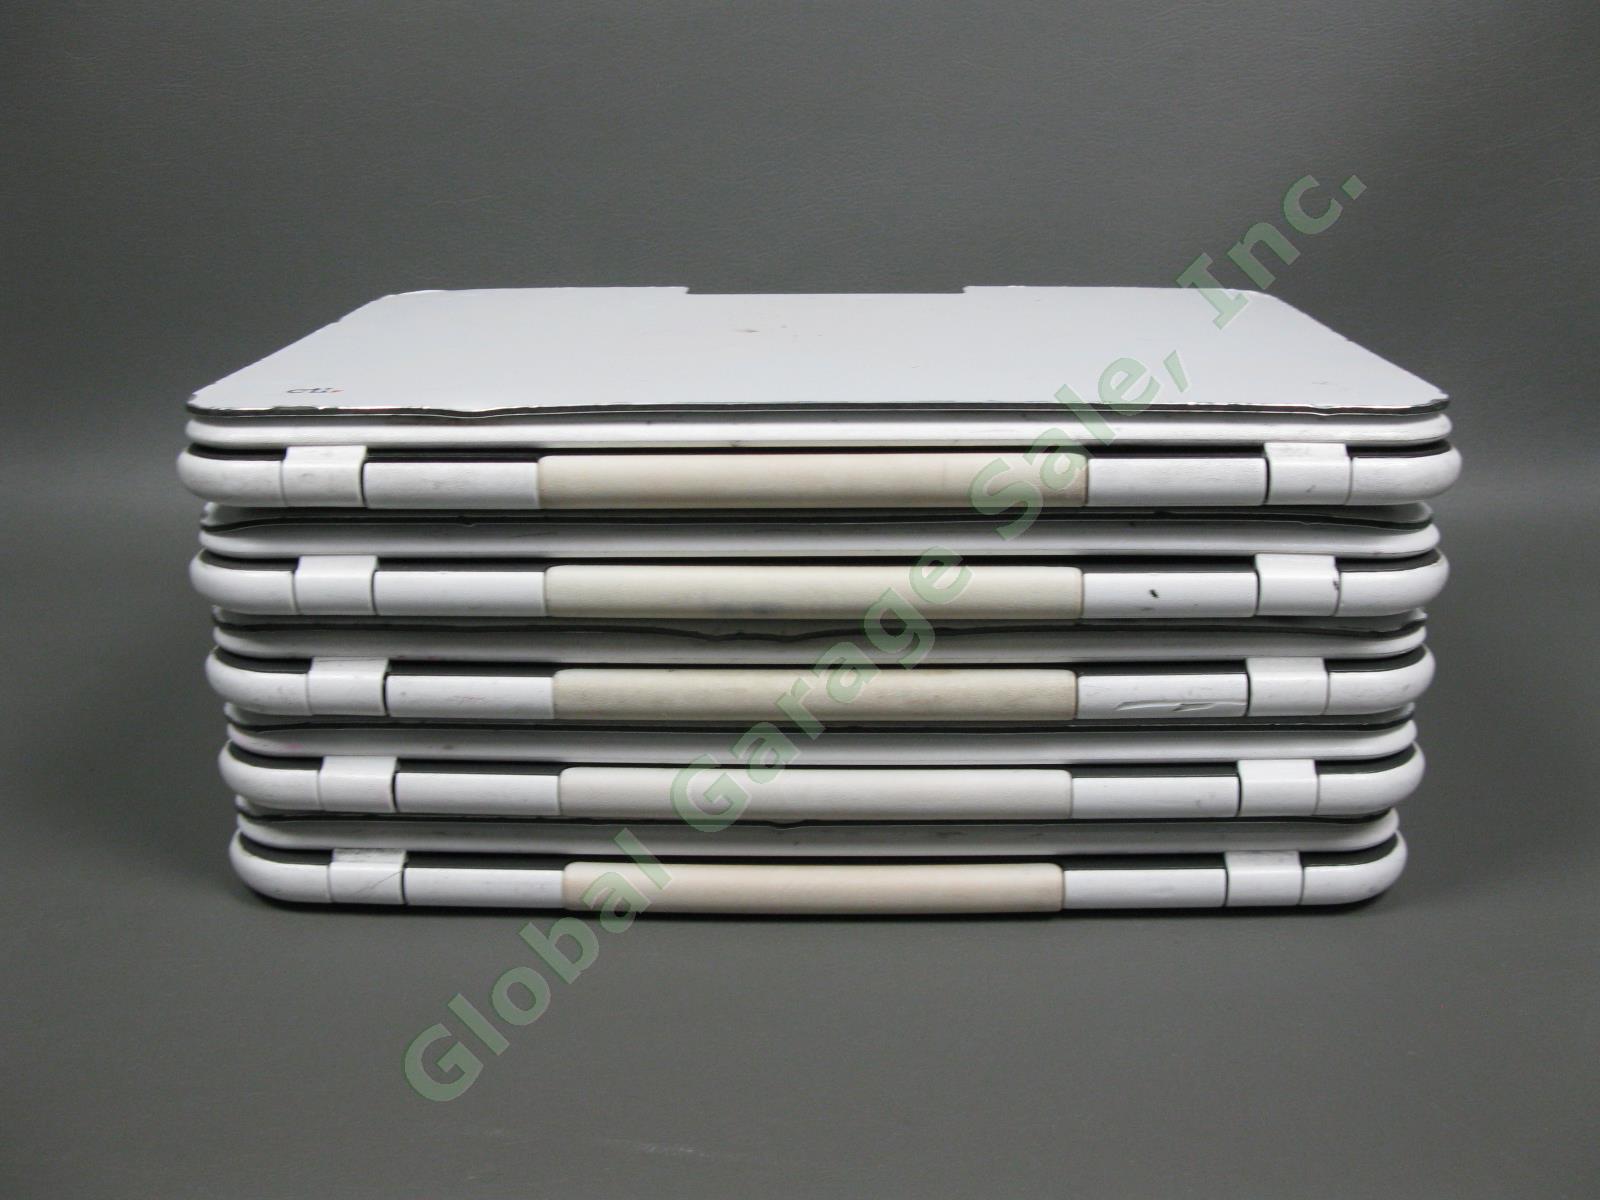 5 CTL NL6 Chromebook Notebook Laptops Lot Intel Celeron N2940 1.83GHz 4GB RAM 5